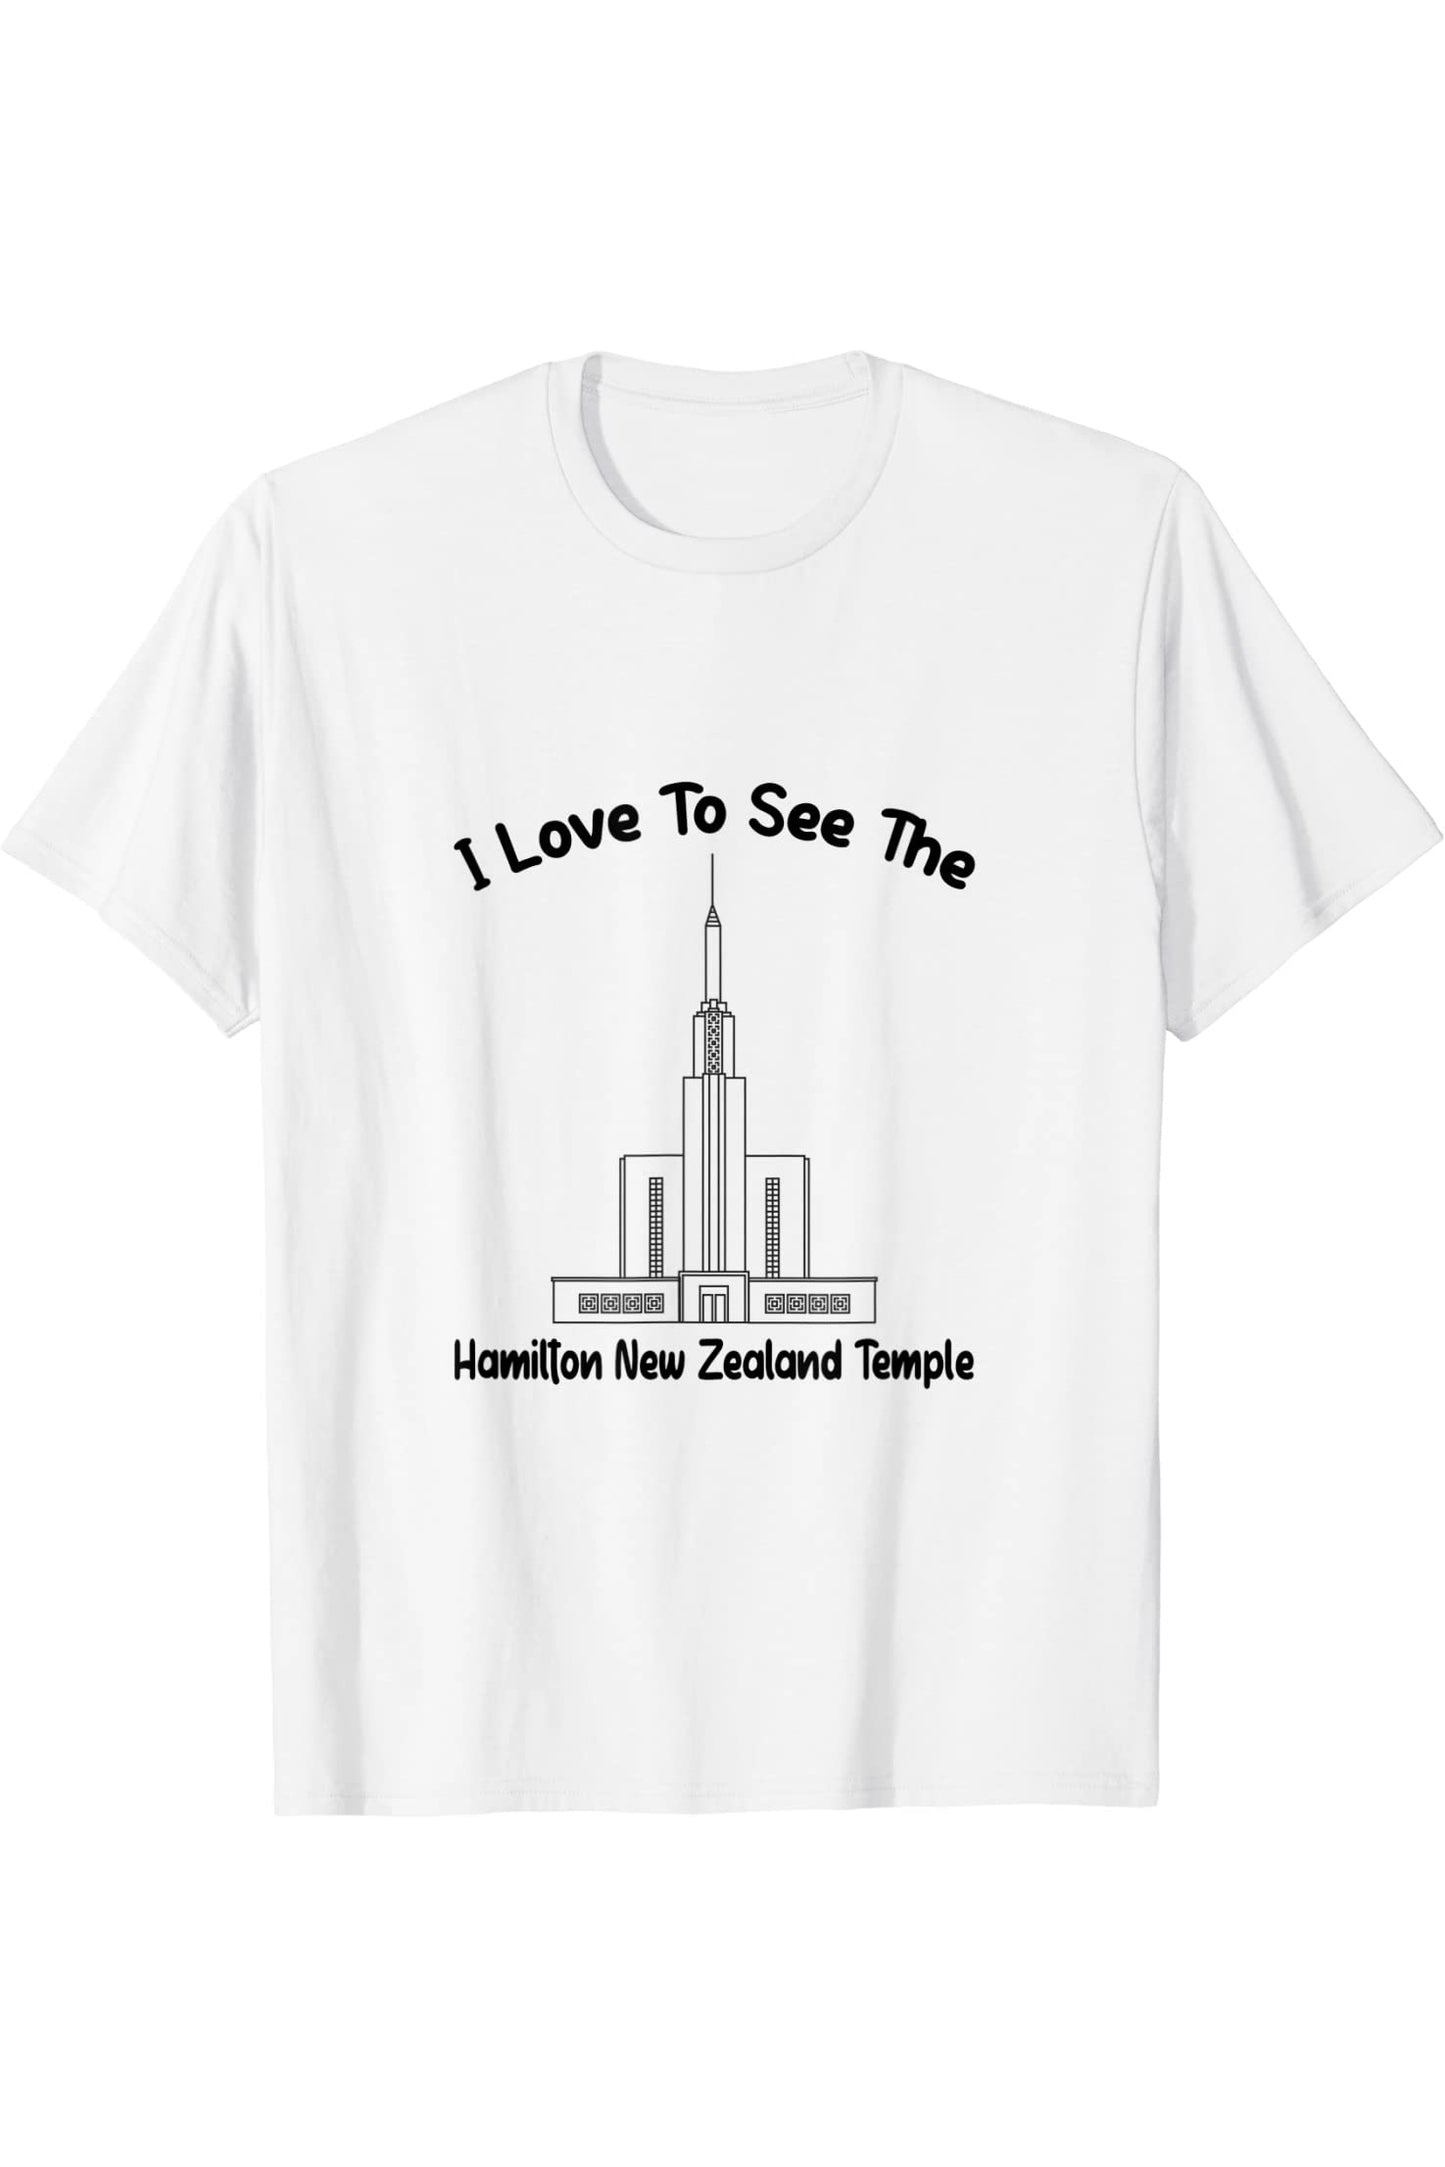 Hamilton New Zealand Temple T-Shirt - Primary Style (English) US